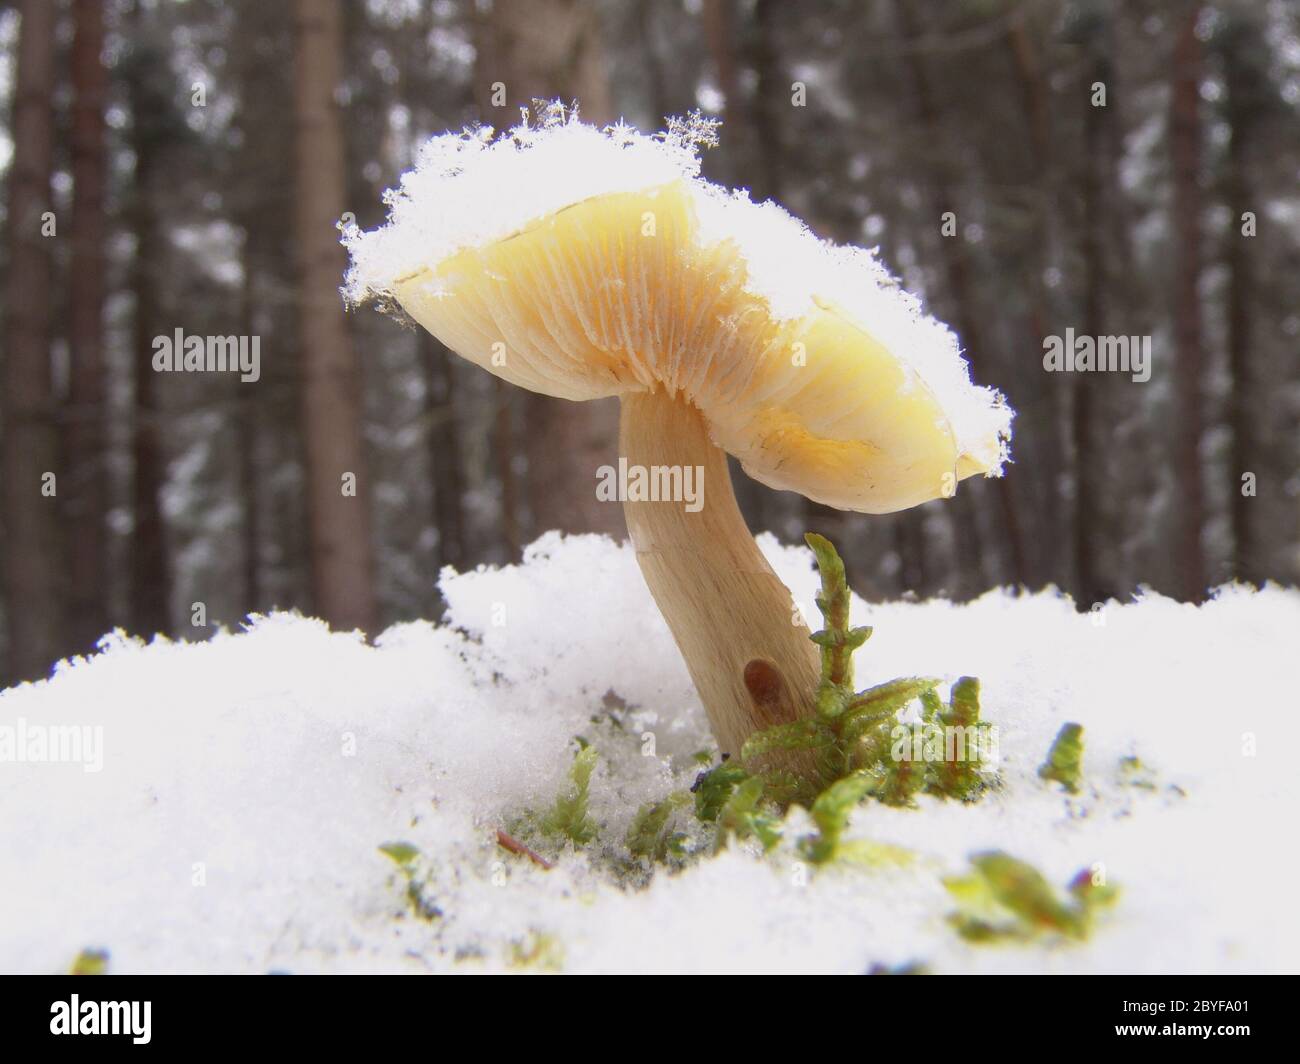 Mushrooms in snow Stock Photo